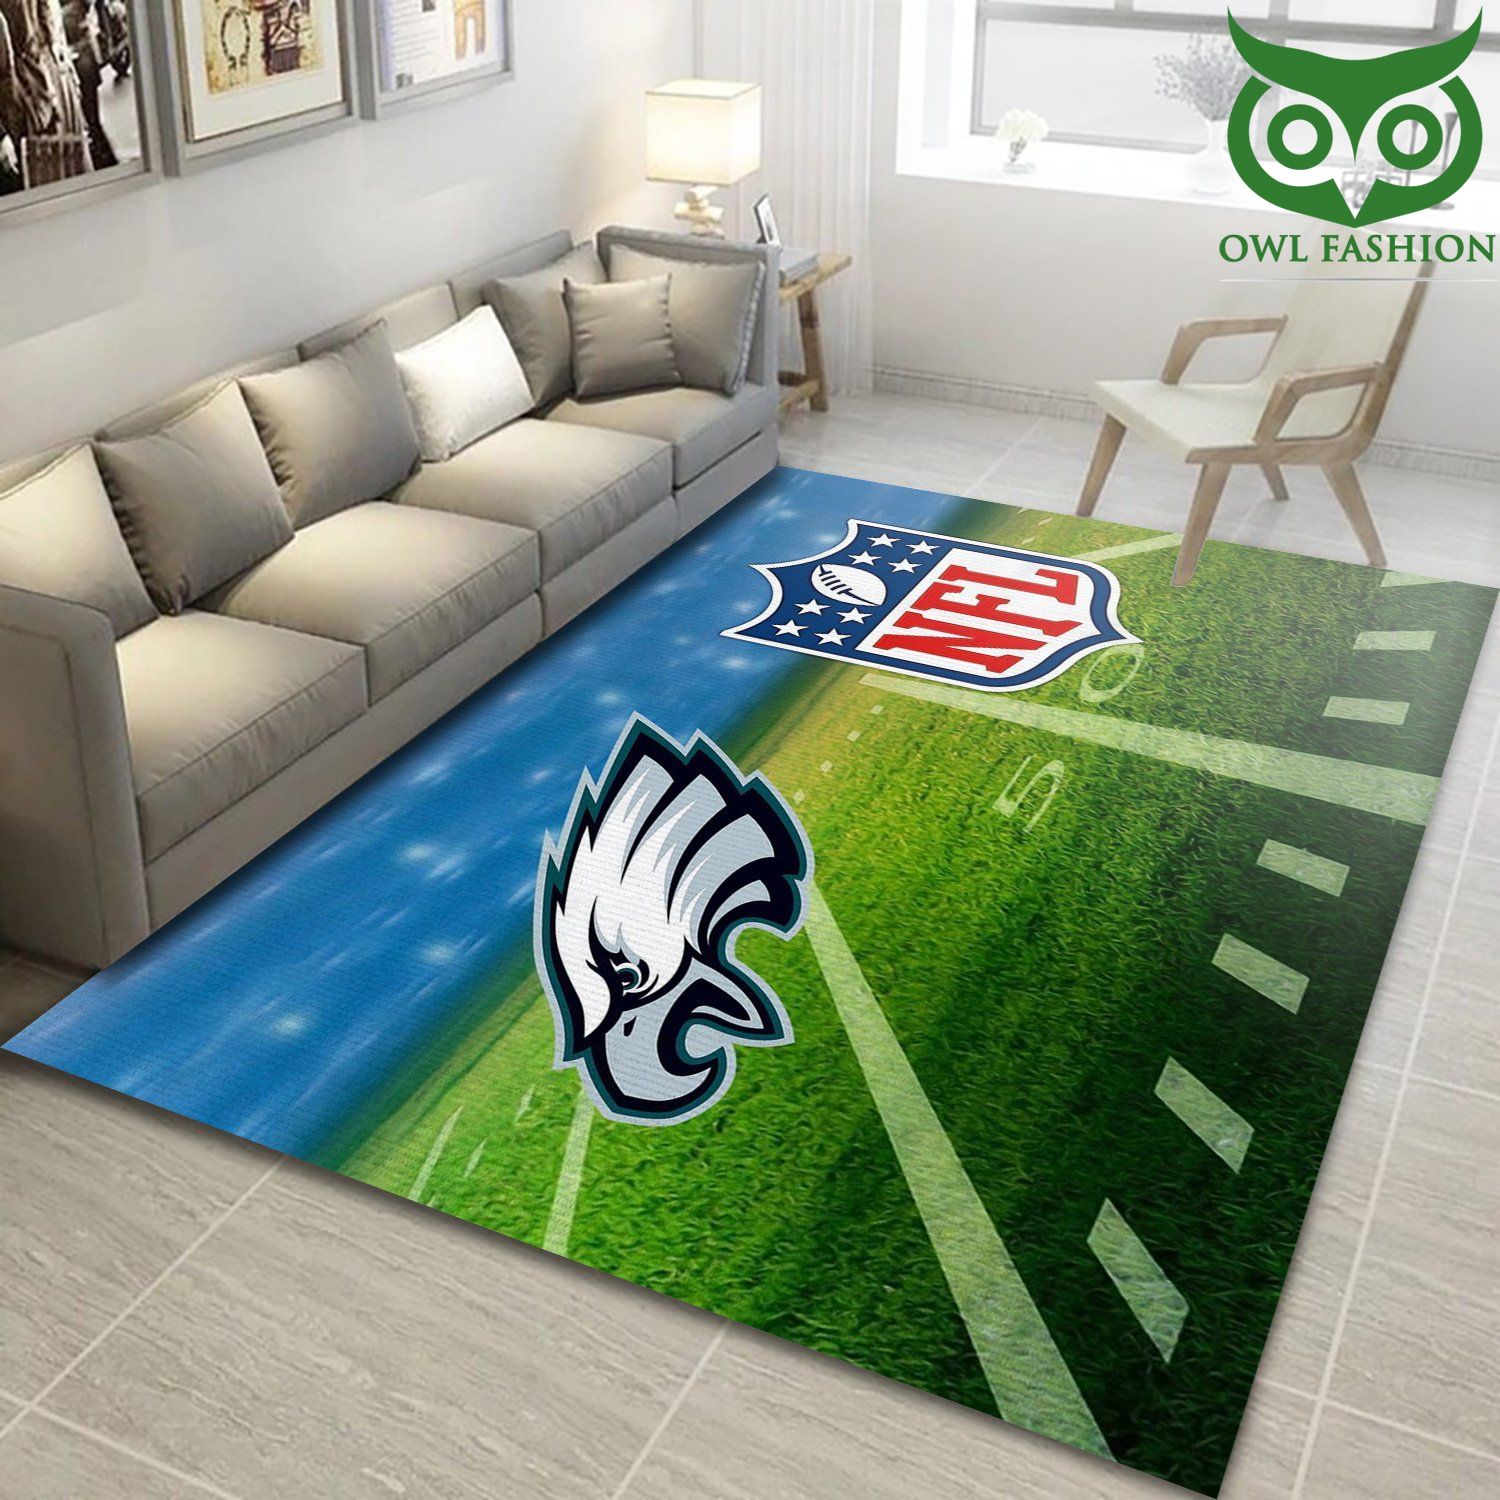 Philadelphia Eagles Nfl Area carpet rug Home and floor Decoration